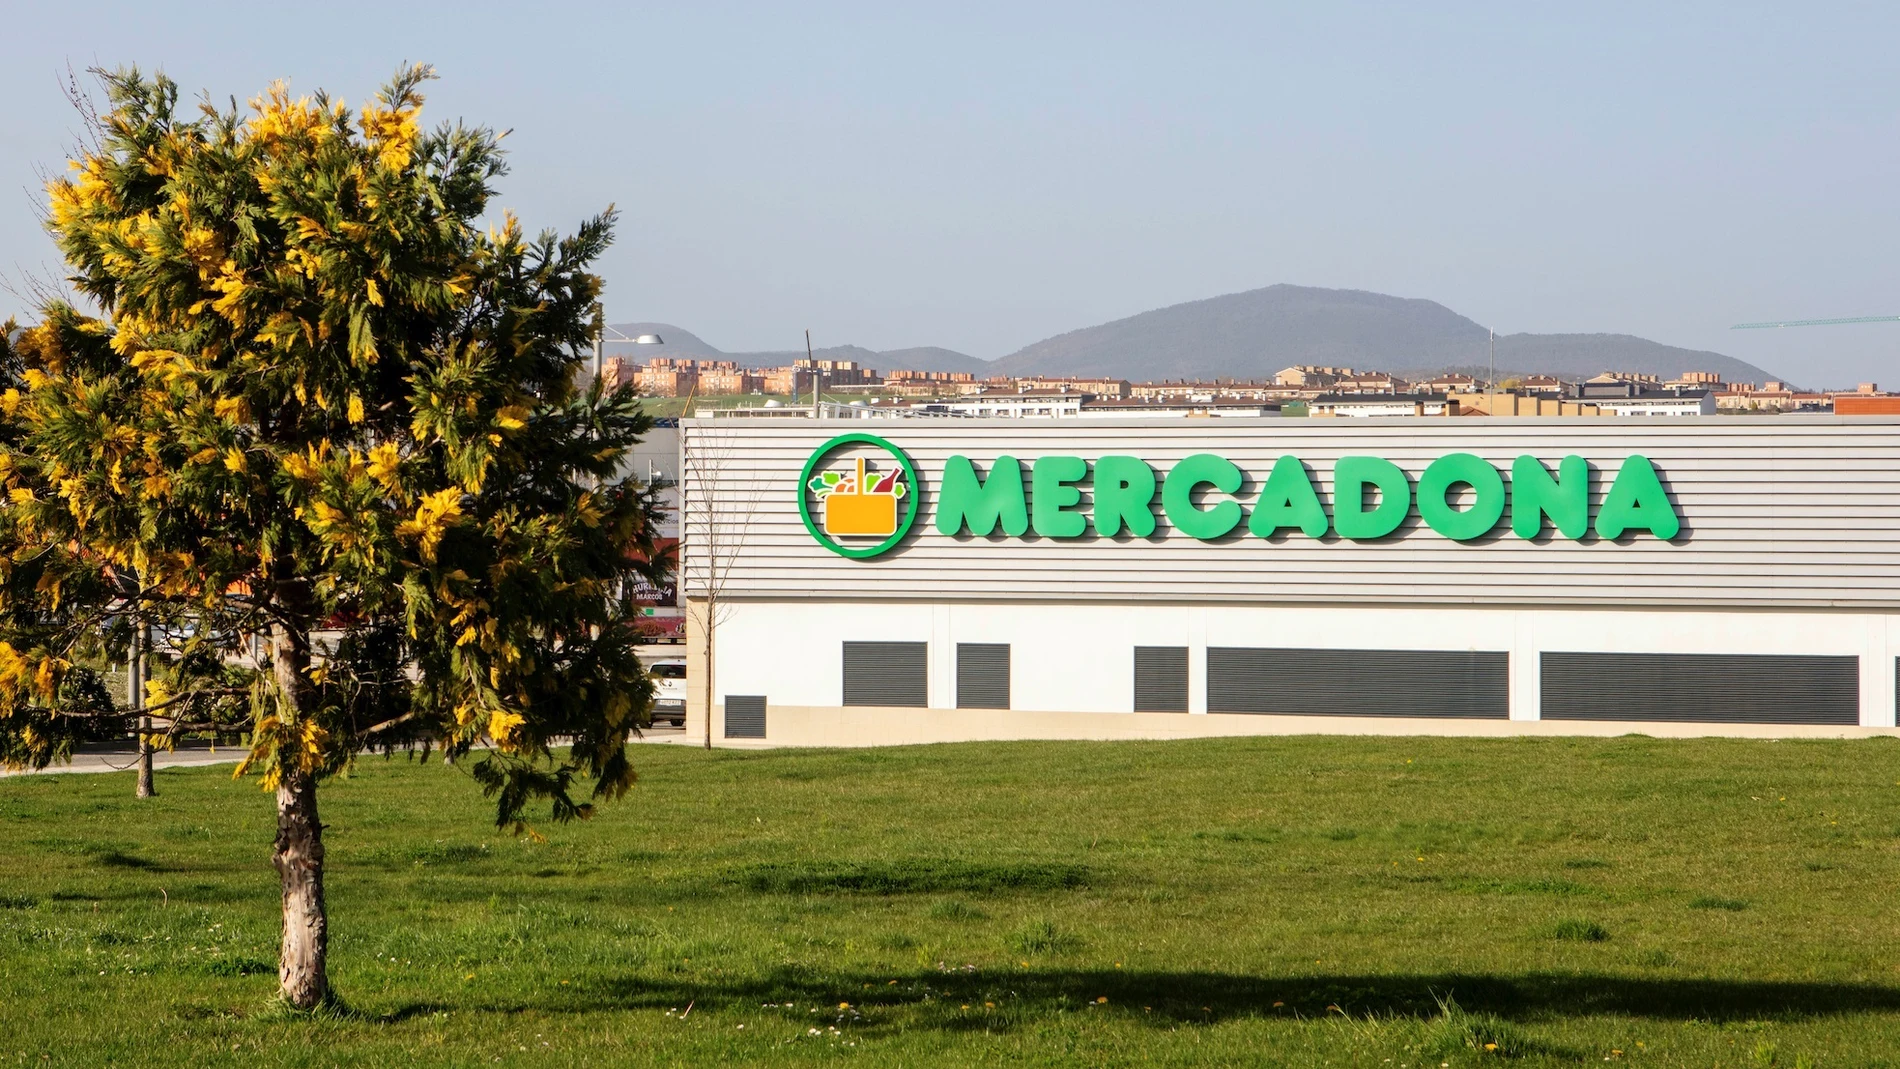 Tienda de Mercadona en Navarra.MERCADONA02/06/2021